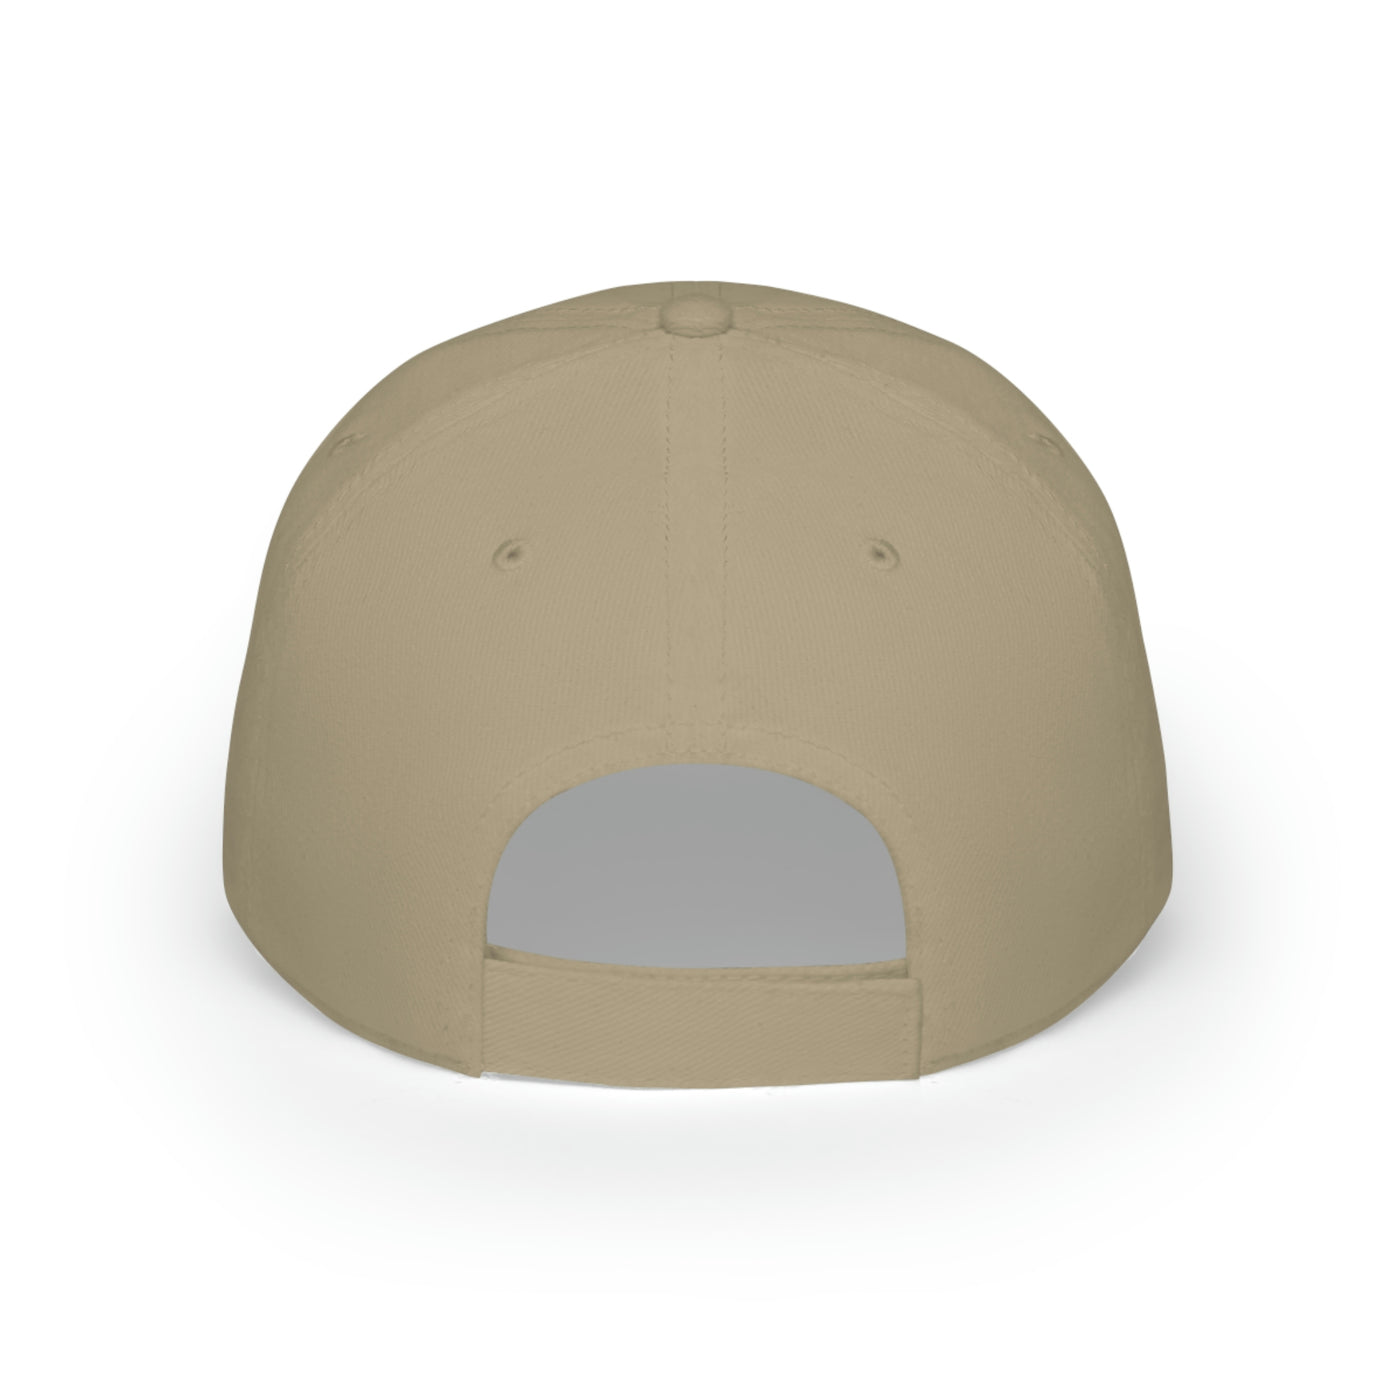 Type One-derful Low Profile Baseball Cap